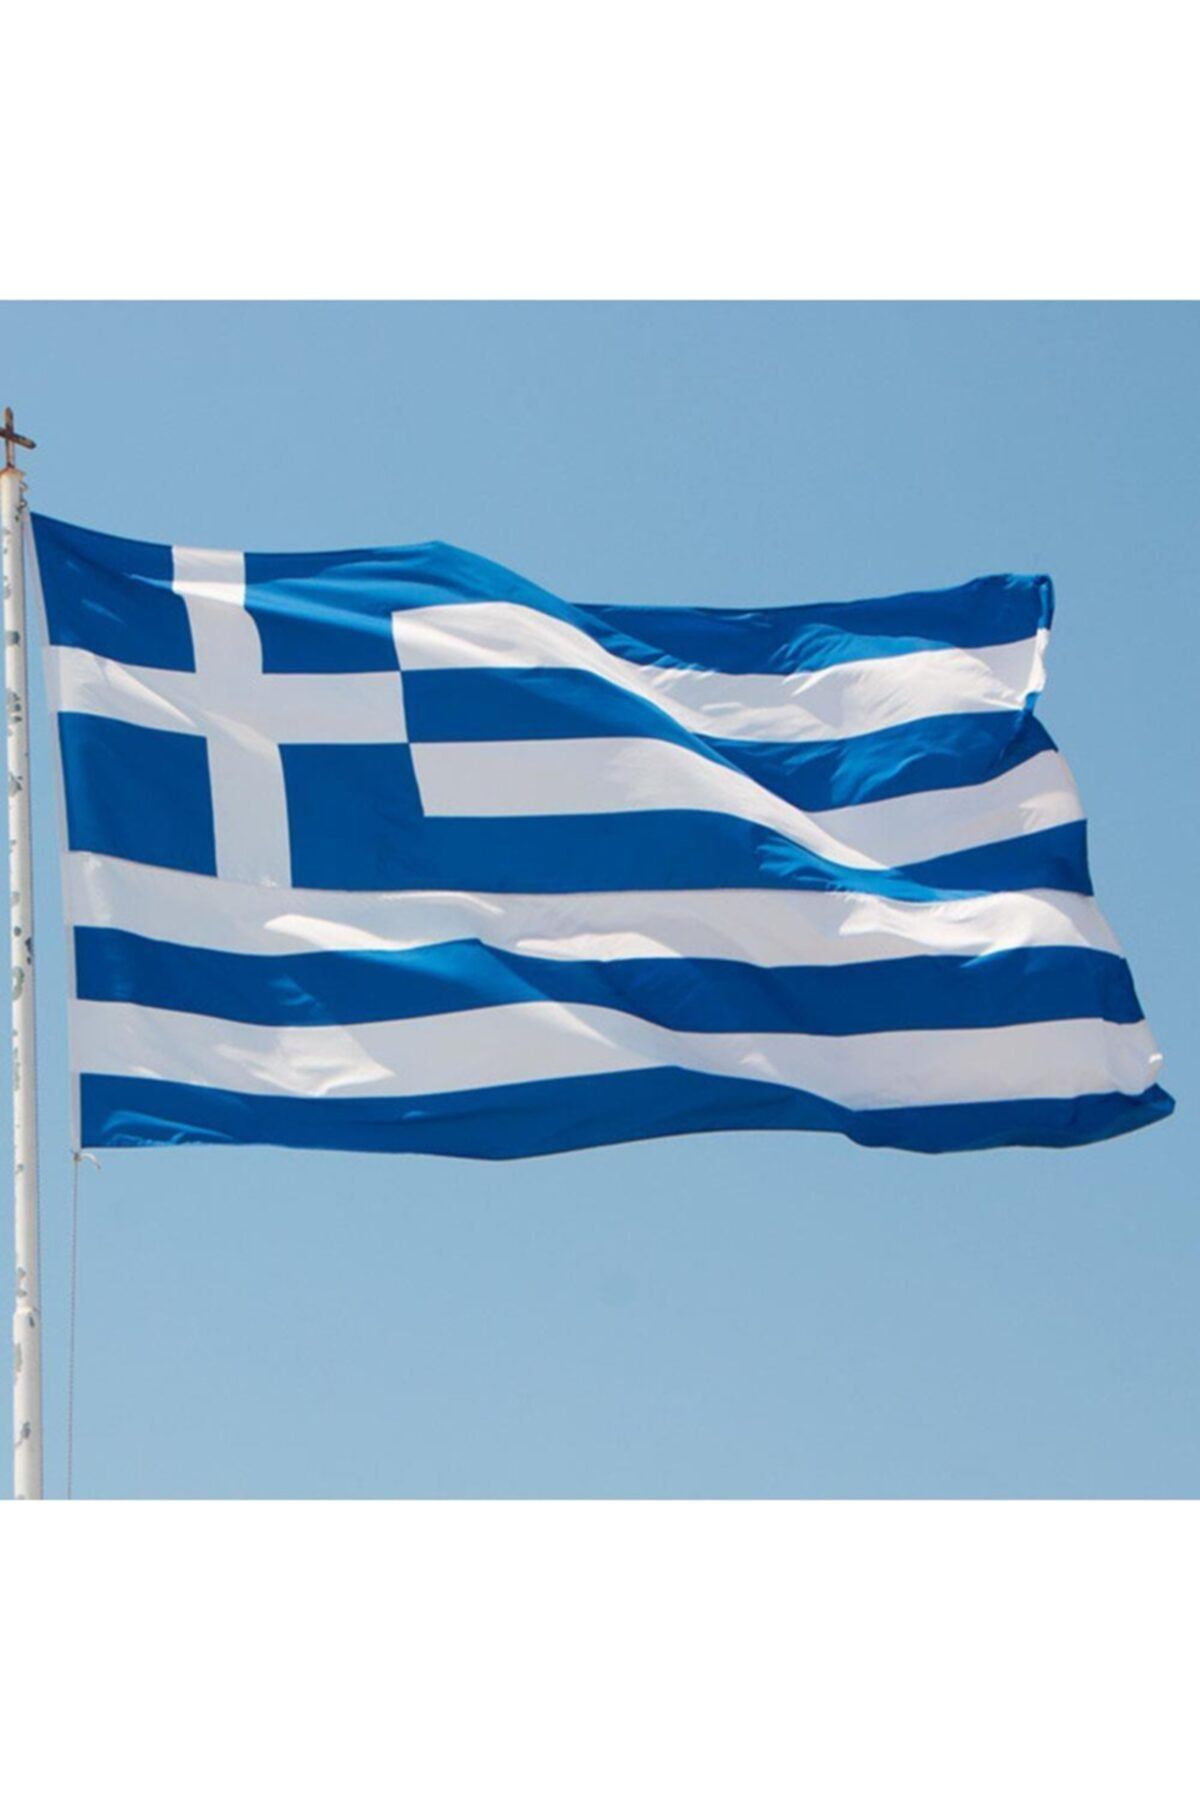 Fors Bayrak Yunanistan Gönder Bayrağı 1.kalite Raşel Kumaş 70x105 Cm